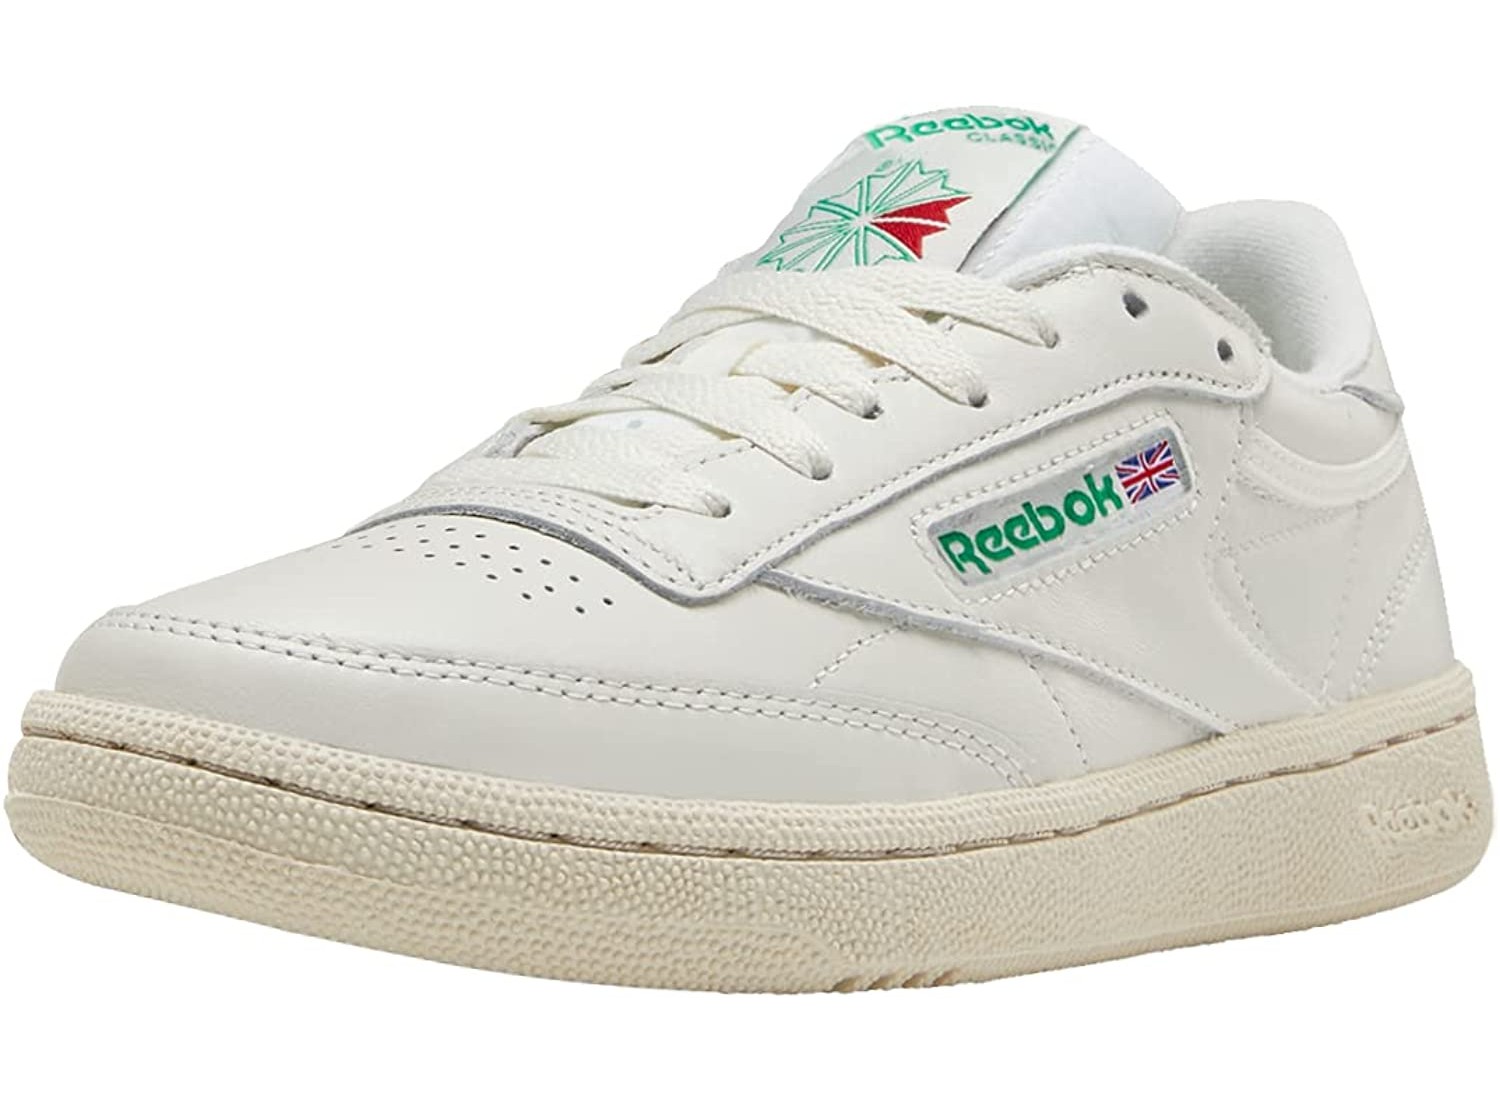 A pair of white Reebok sneakers.